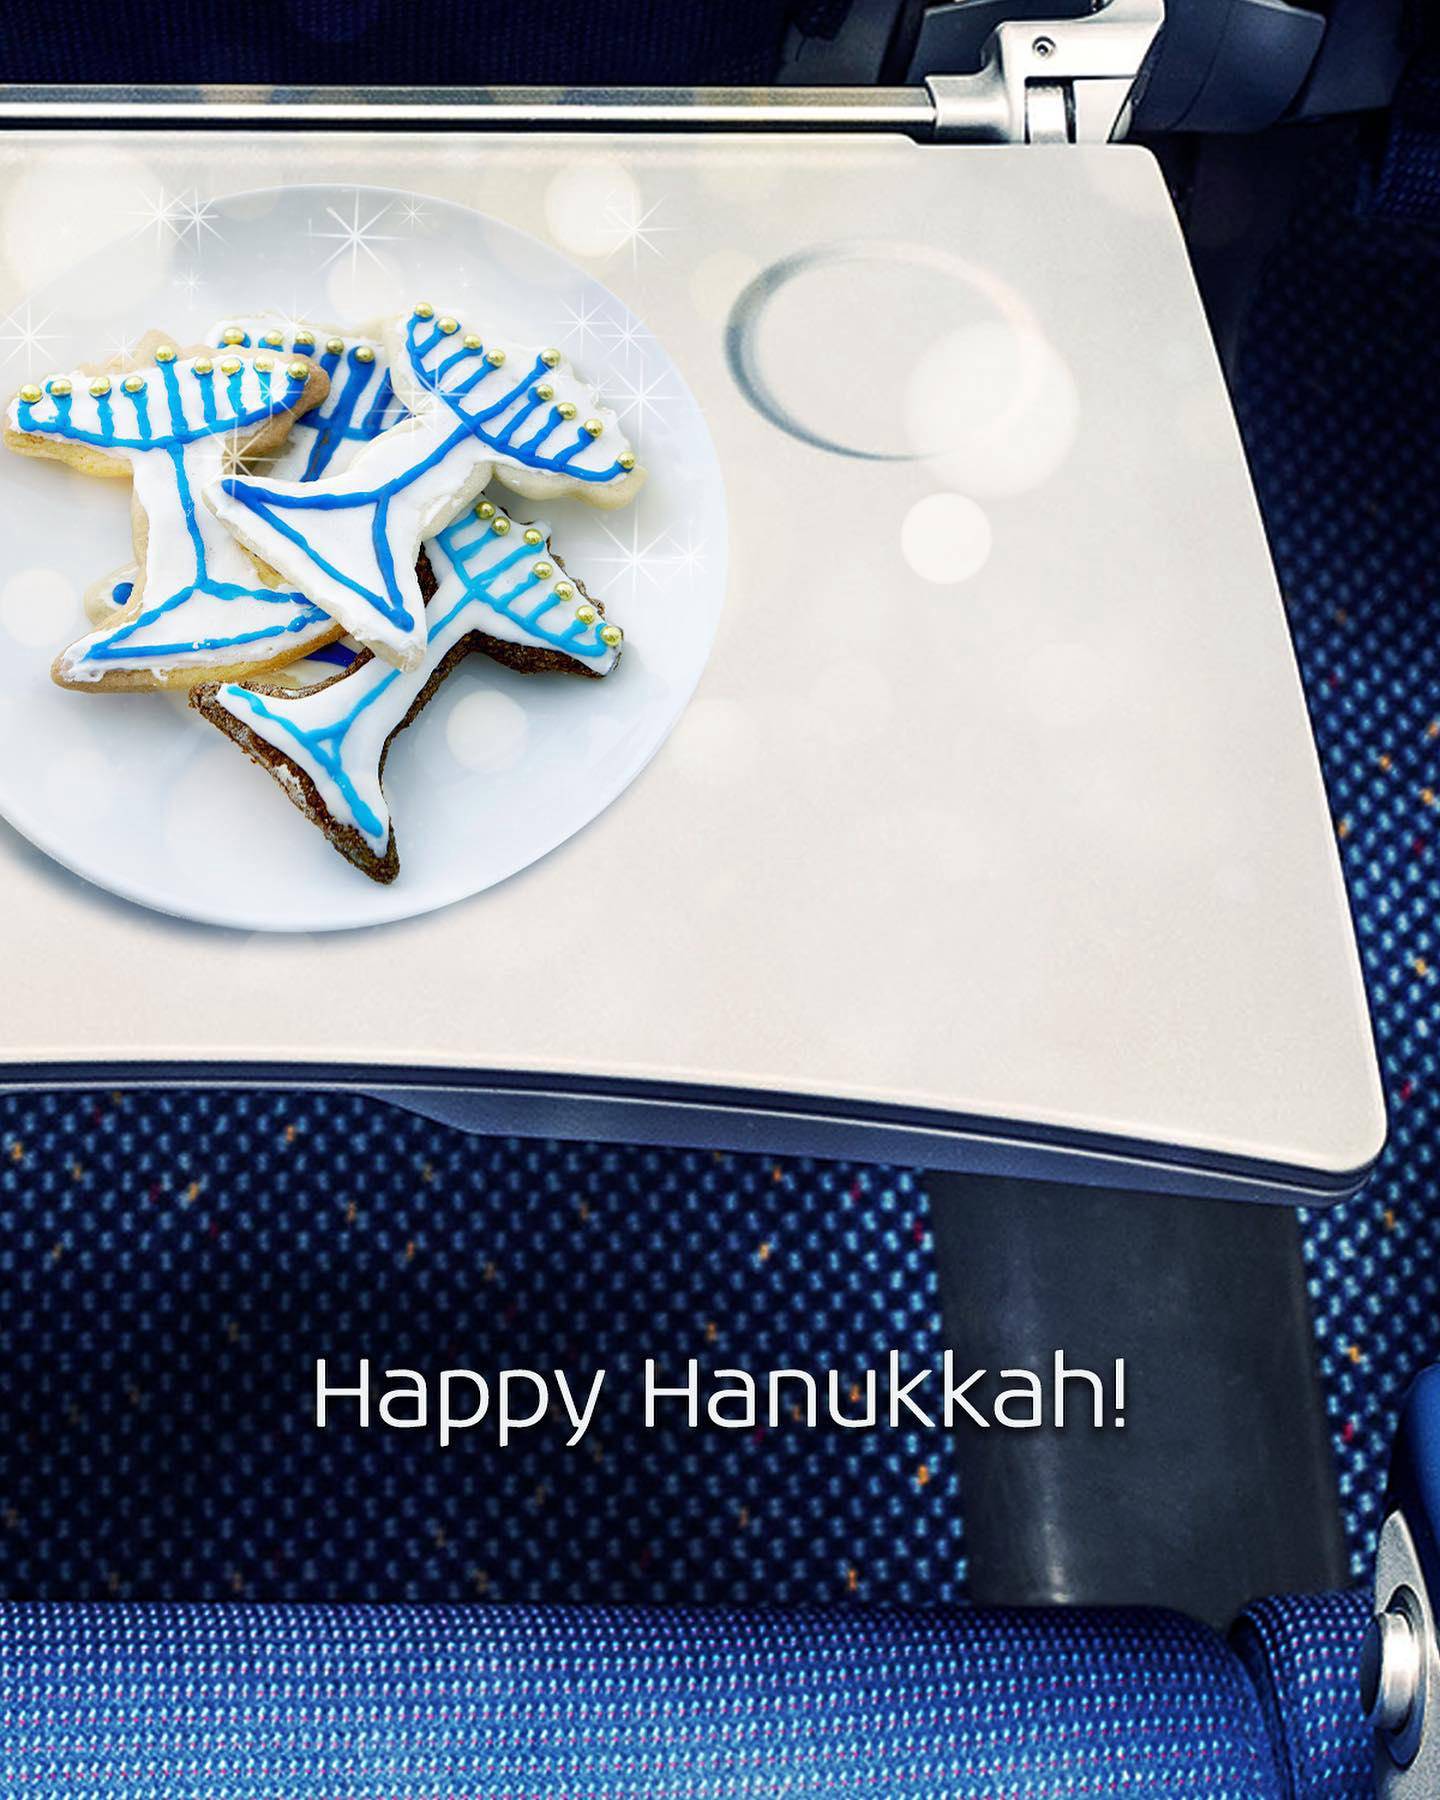 KLM Royal Dutch Airlines - Happy Hanukkah from KLM